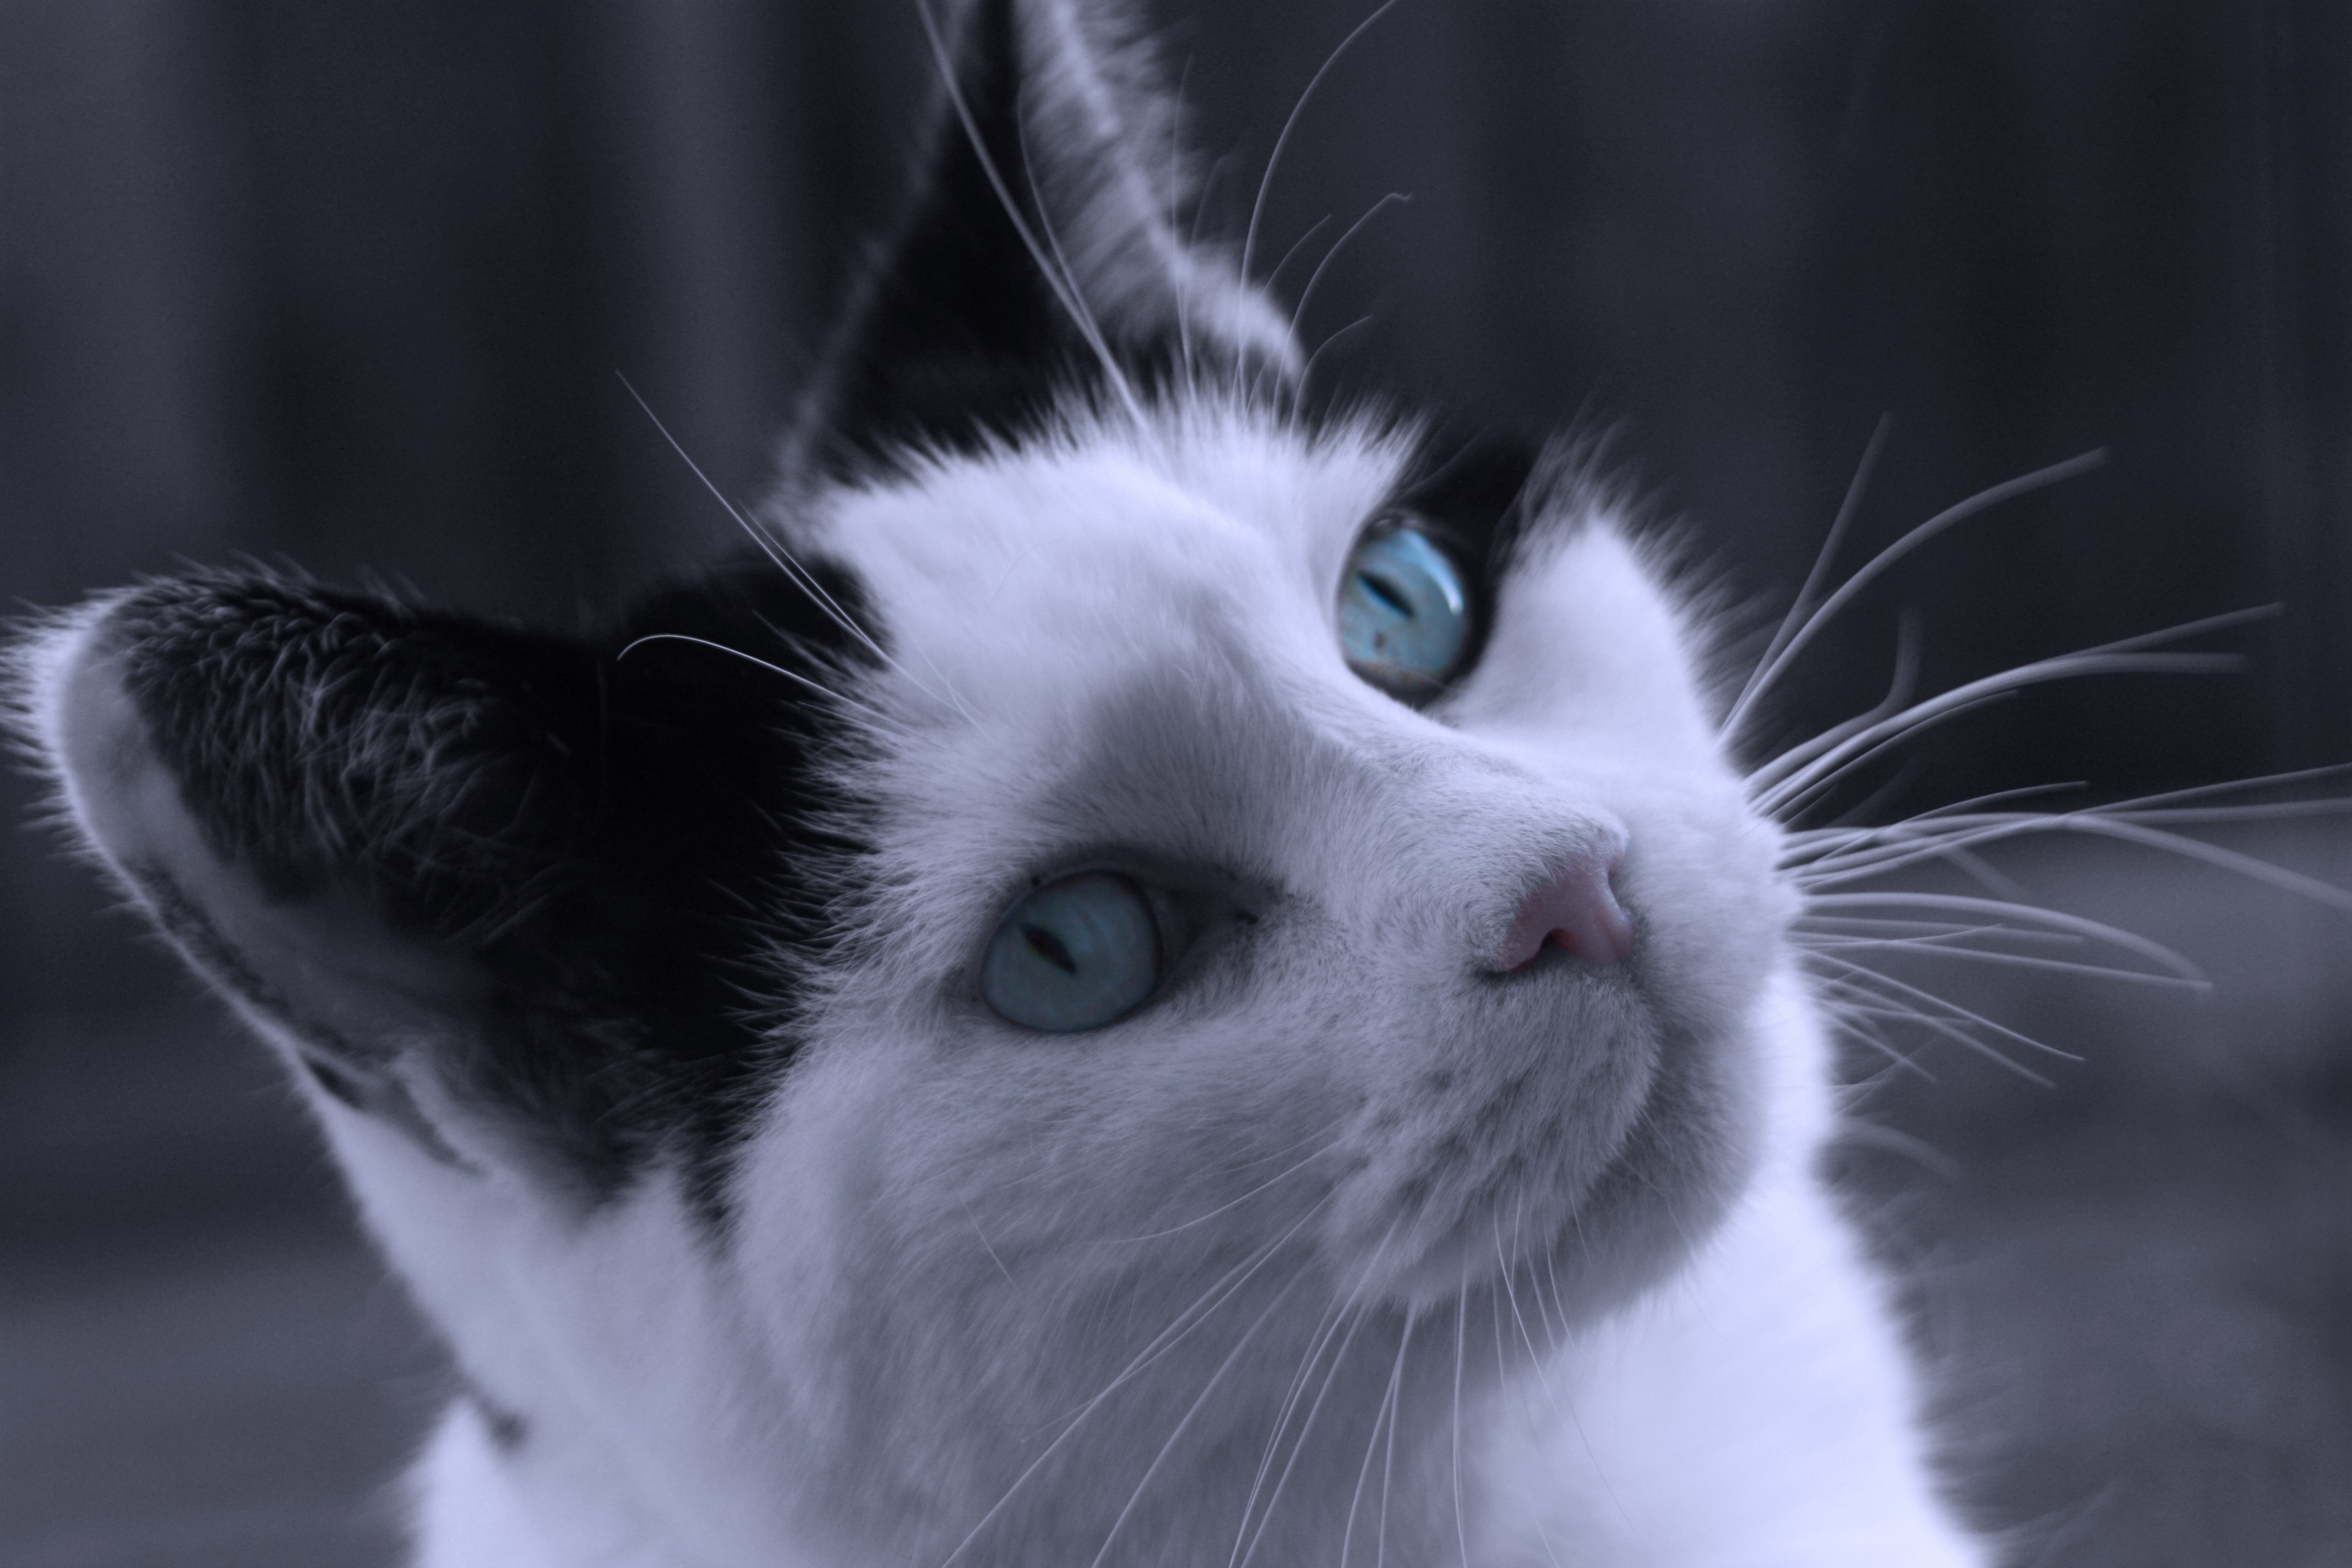 white and black short coated cat